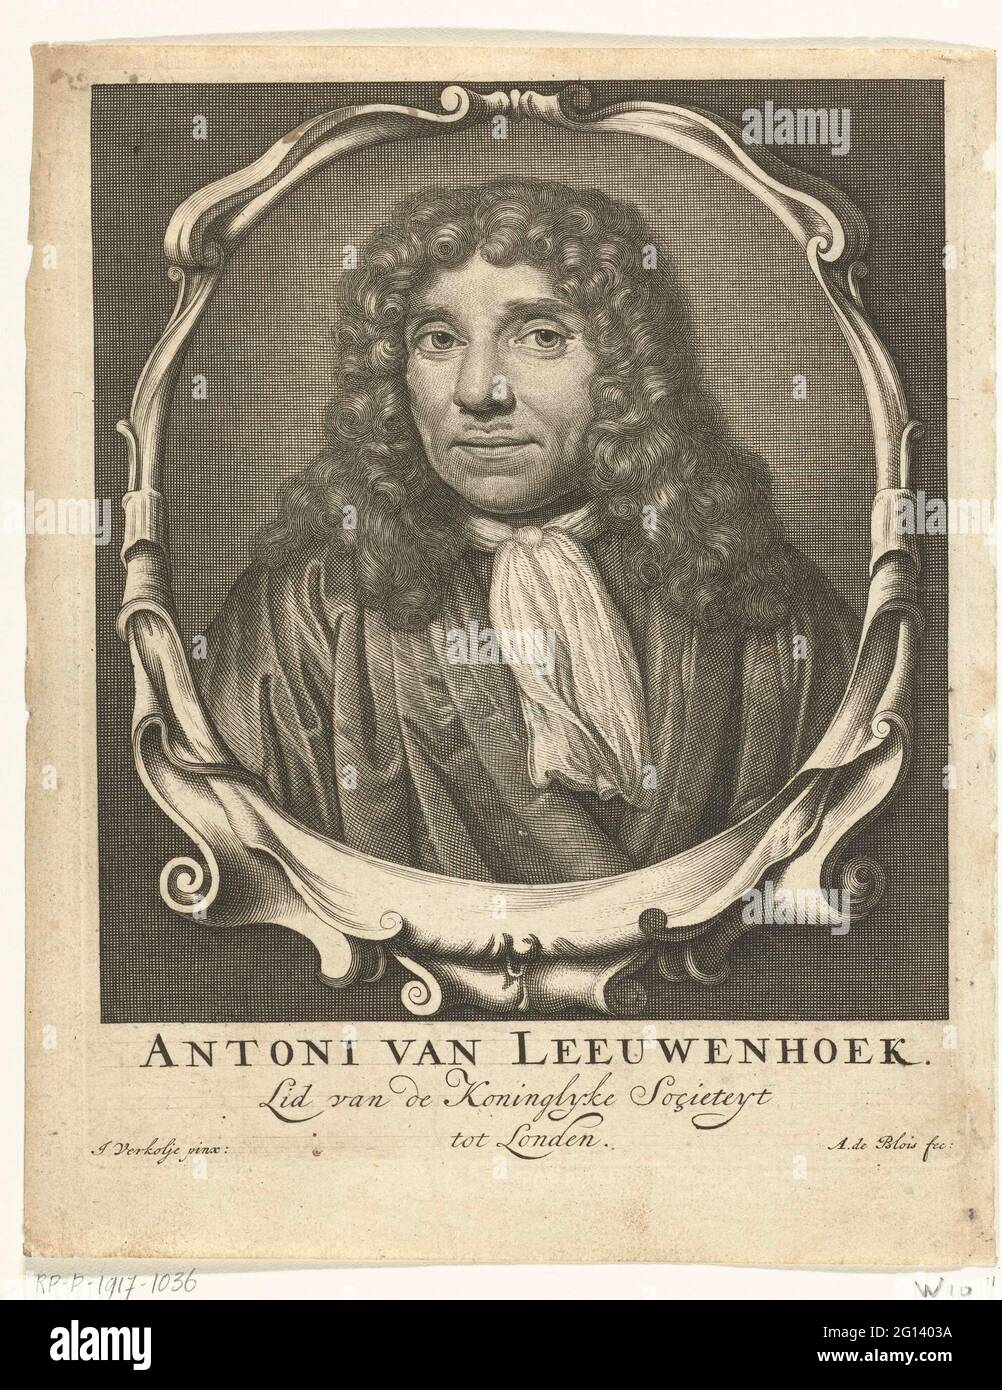 Portrait of Antonie van Leeuwenhoek; Antoni van Leeuwenhoek member of the Kinkelly Societeyt to London. Portrait of Antonie van Leeuwenhoek, bust in oval picture frame with lobe ornament. Stock Photo